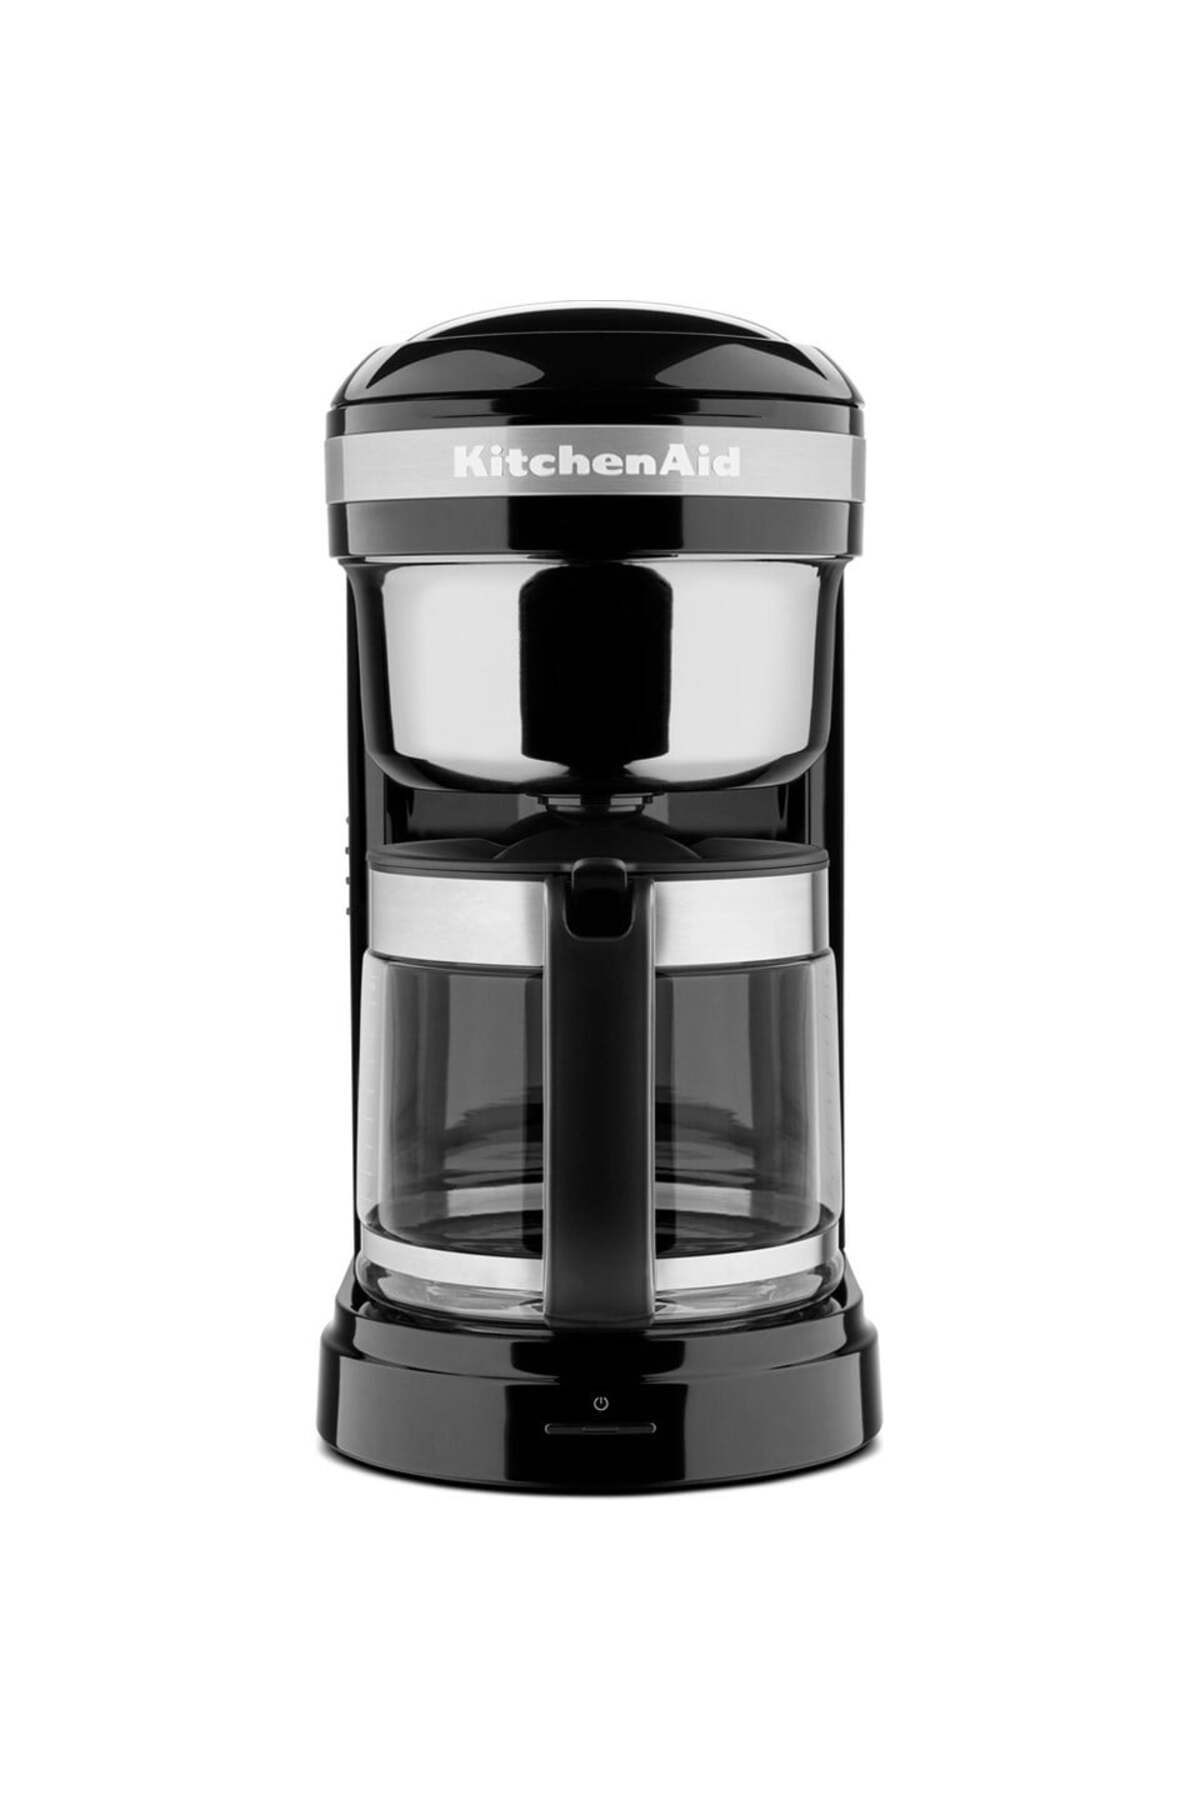 Kitchenaid 5kcm1209eob Onxy Black Siyah Filtre Kahve Makinesi Uyumlu